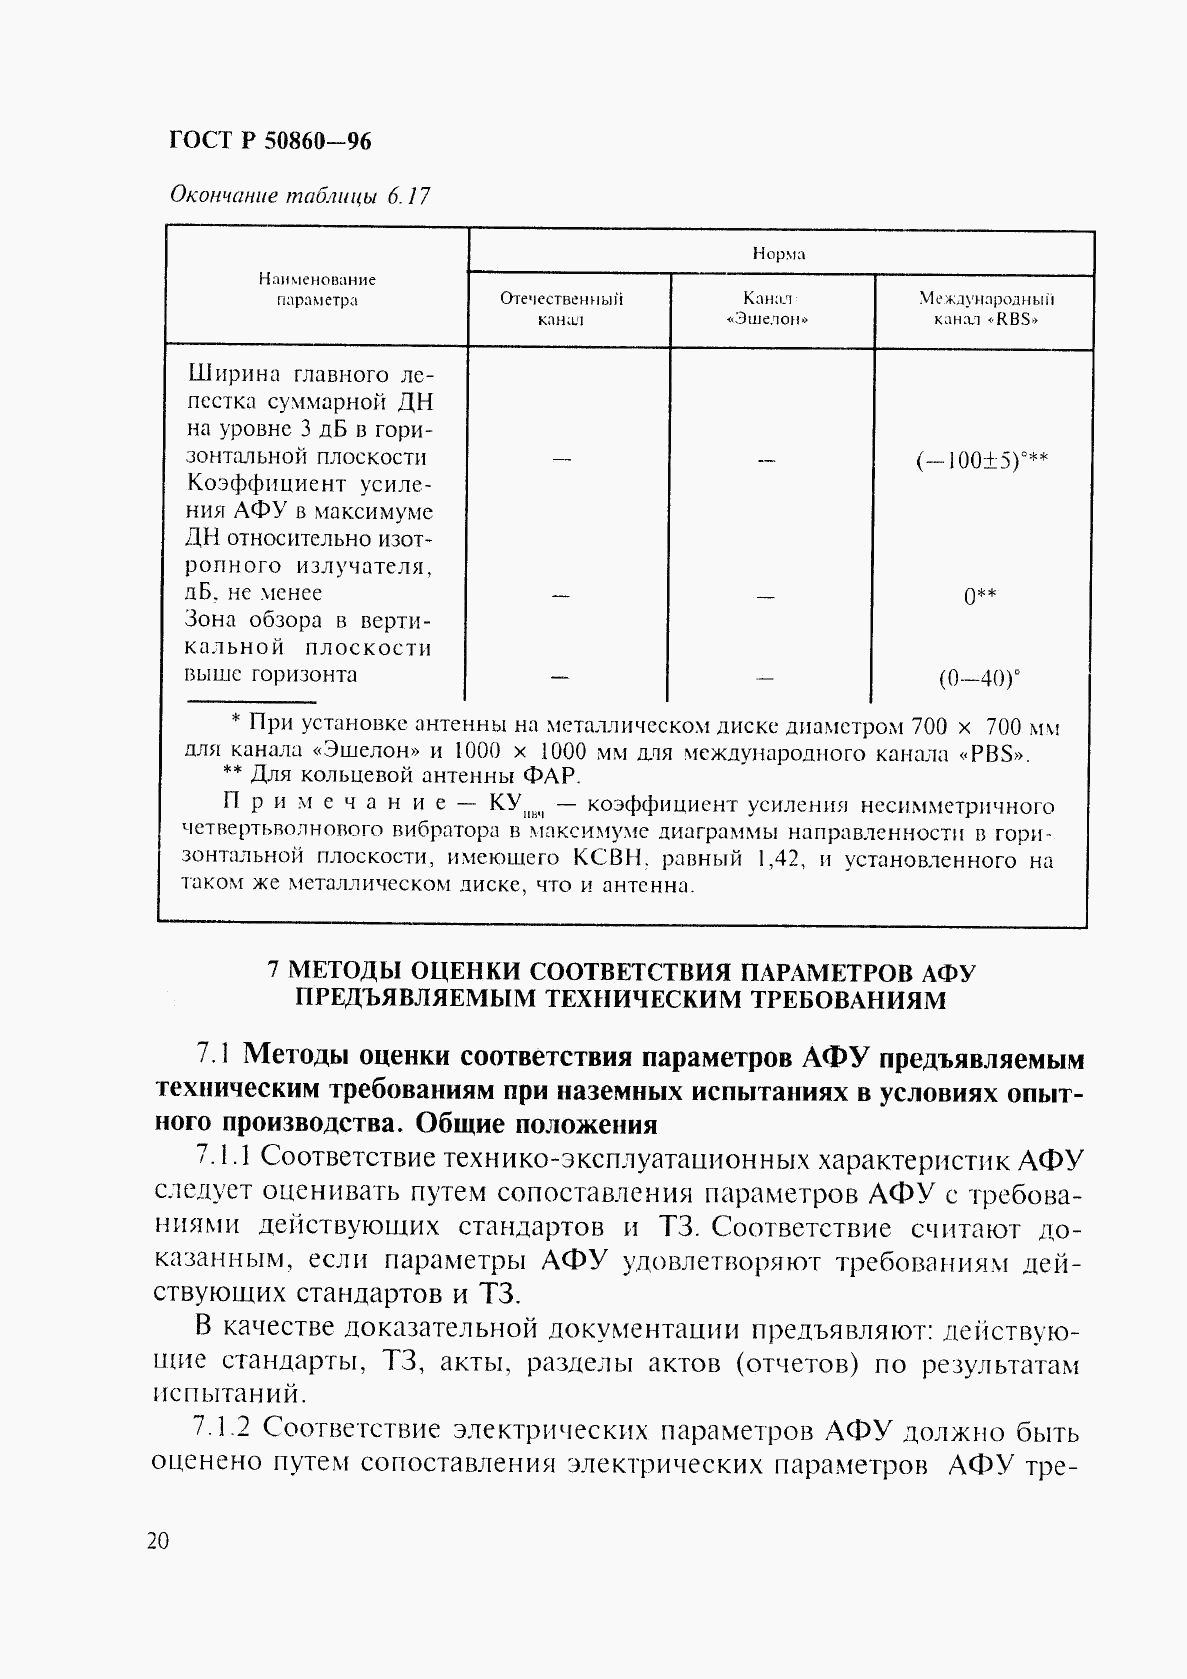 ГОСТ Р 50860-96, страница 25